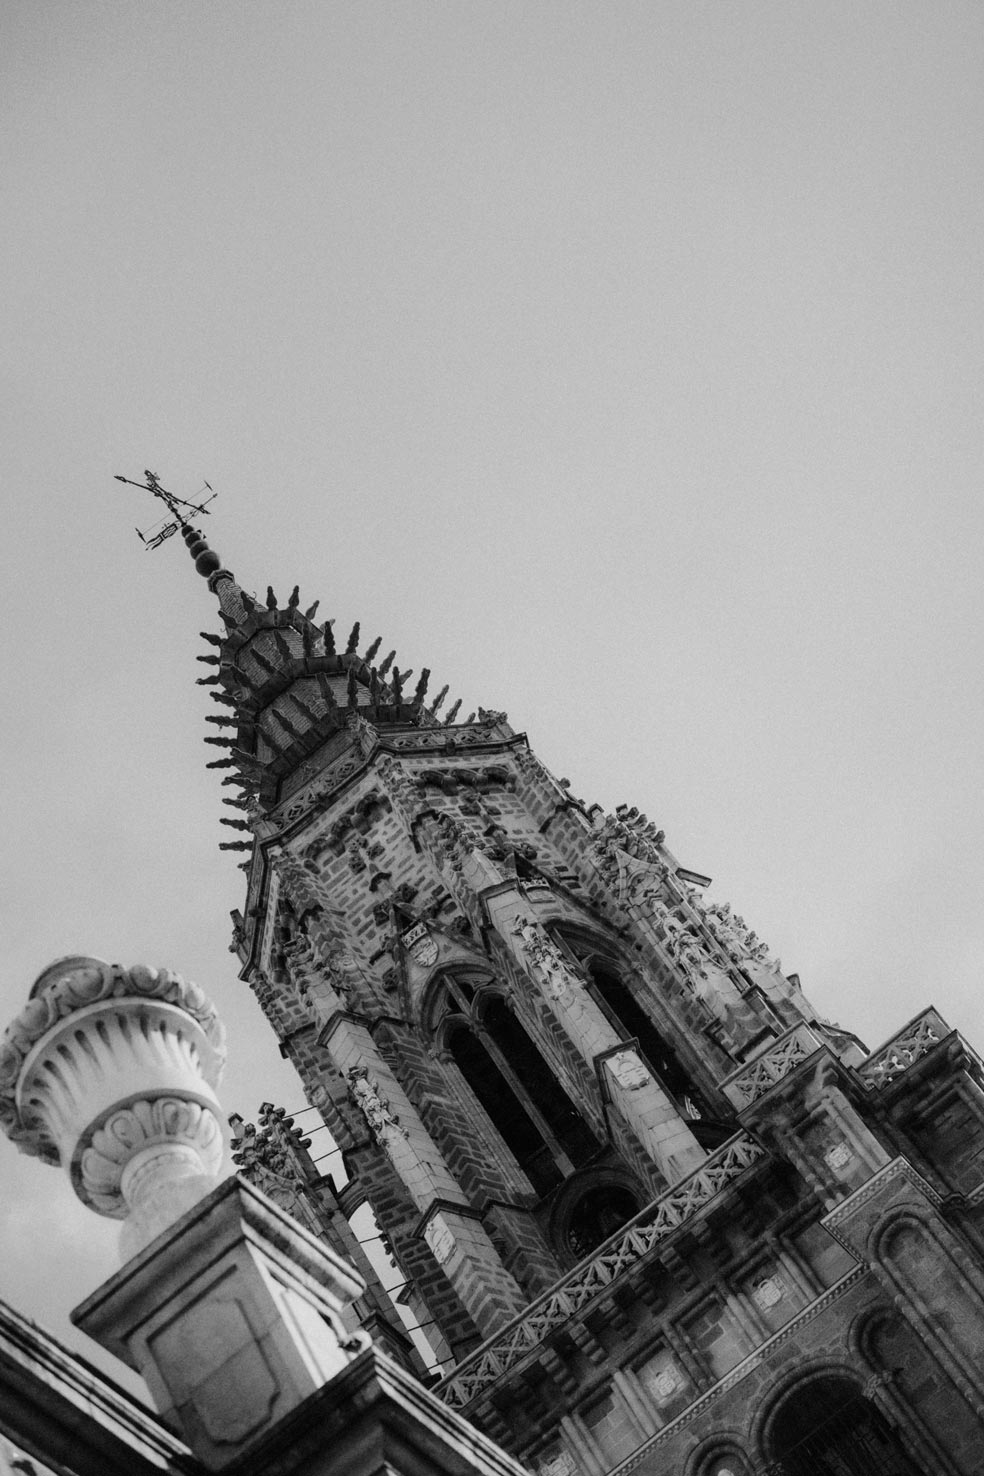 ninarete de la catedral de Toledo